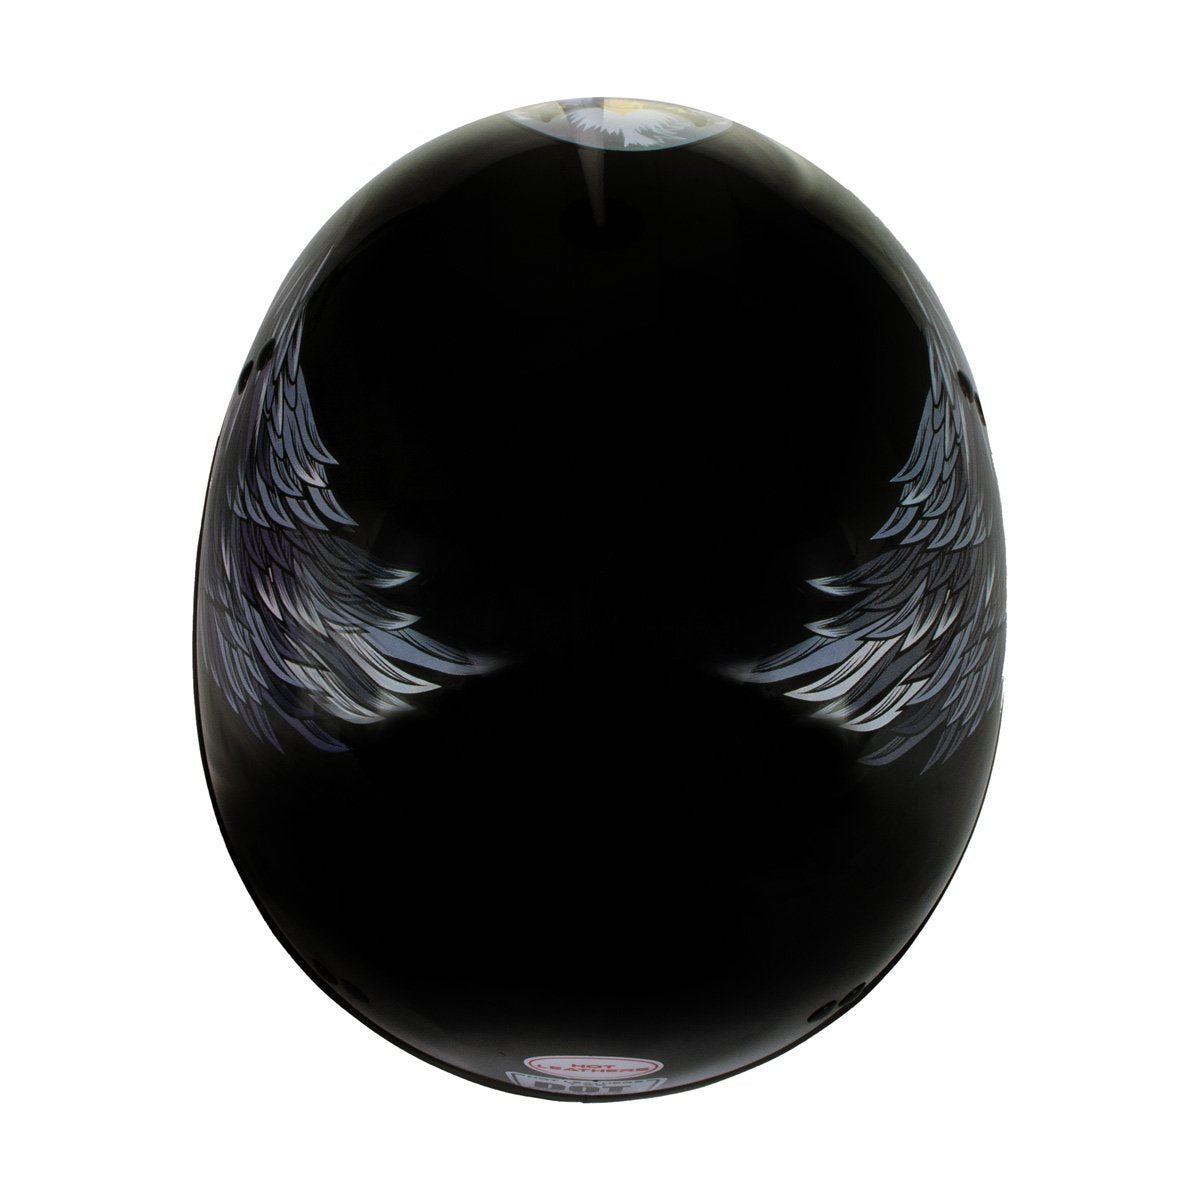 Hot Leathers T68 'Eagle' Black Advanced DOT Motorcycle Skull Cap Helmet